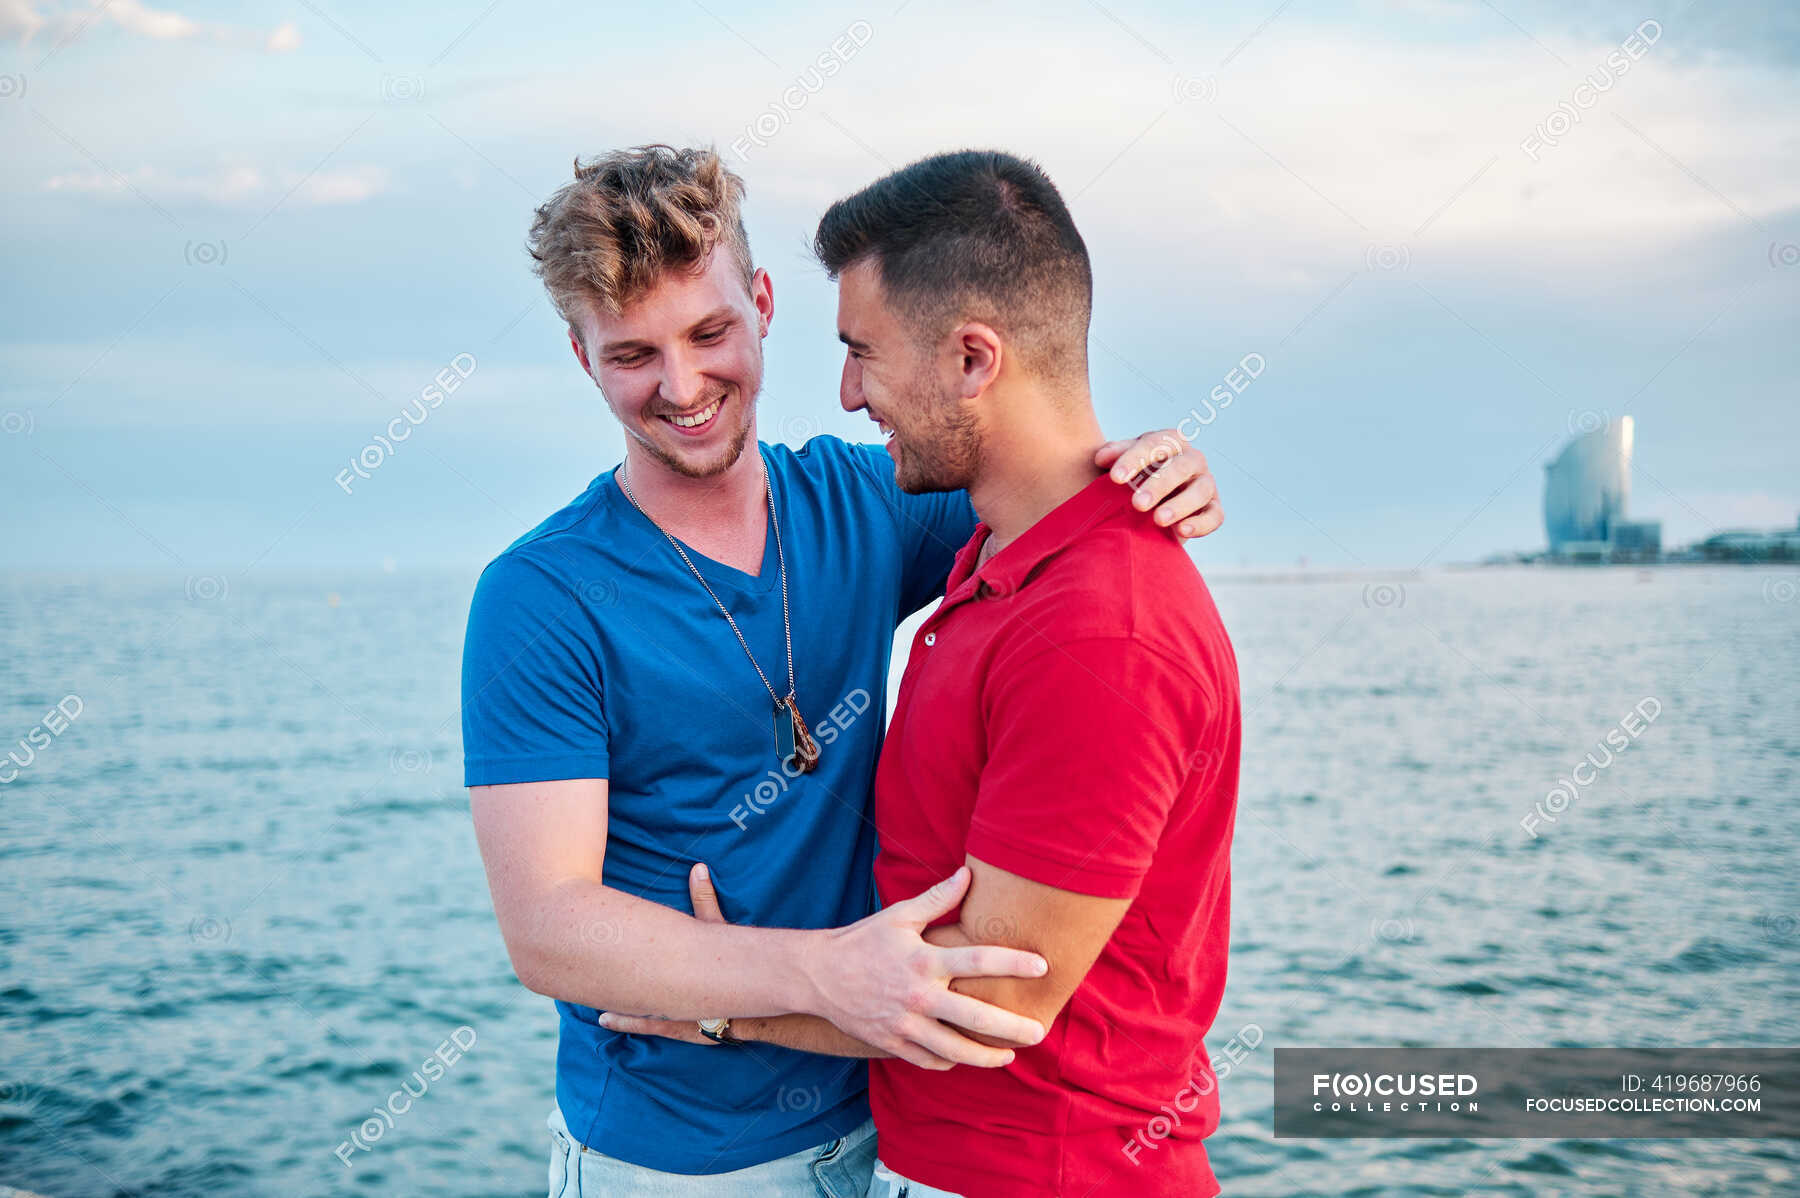 HOMOSEKSUELLE DATING APPS RUSLAND